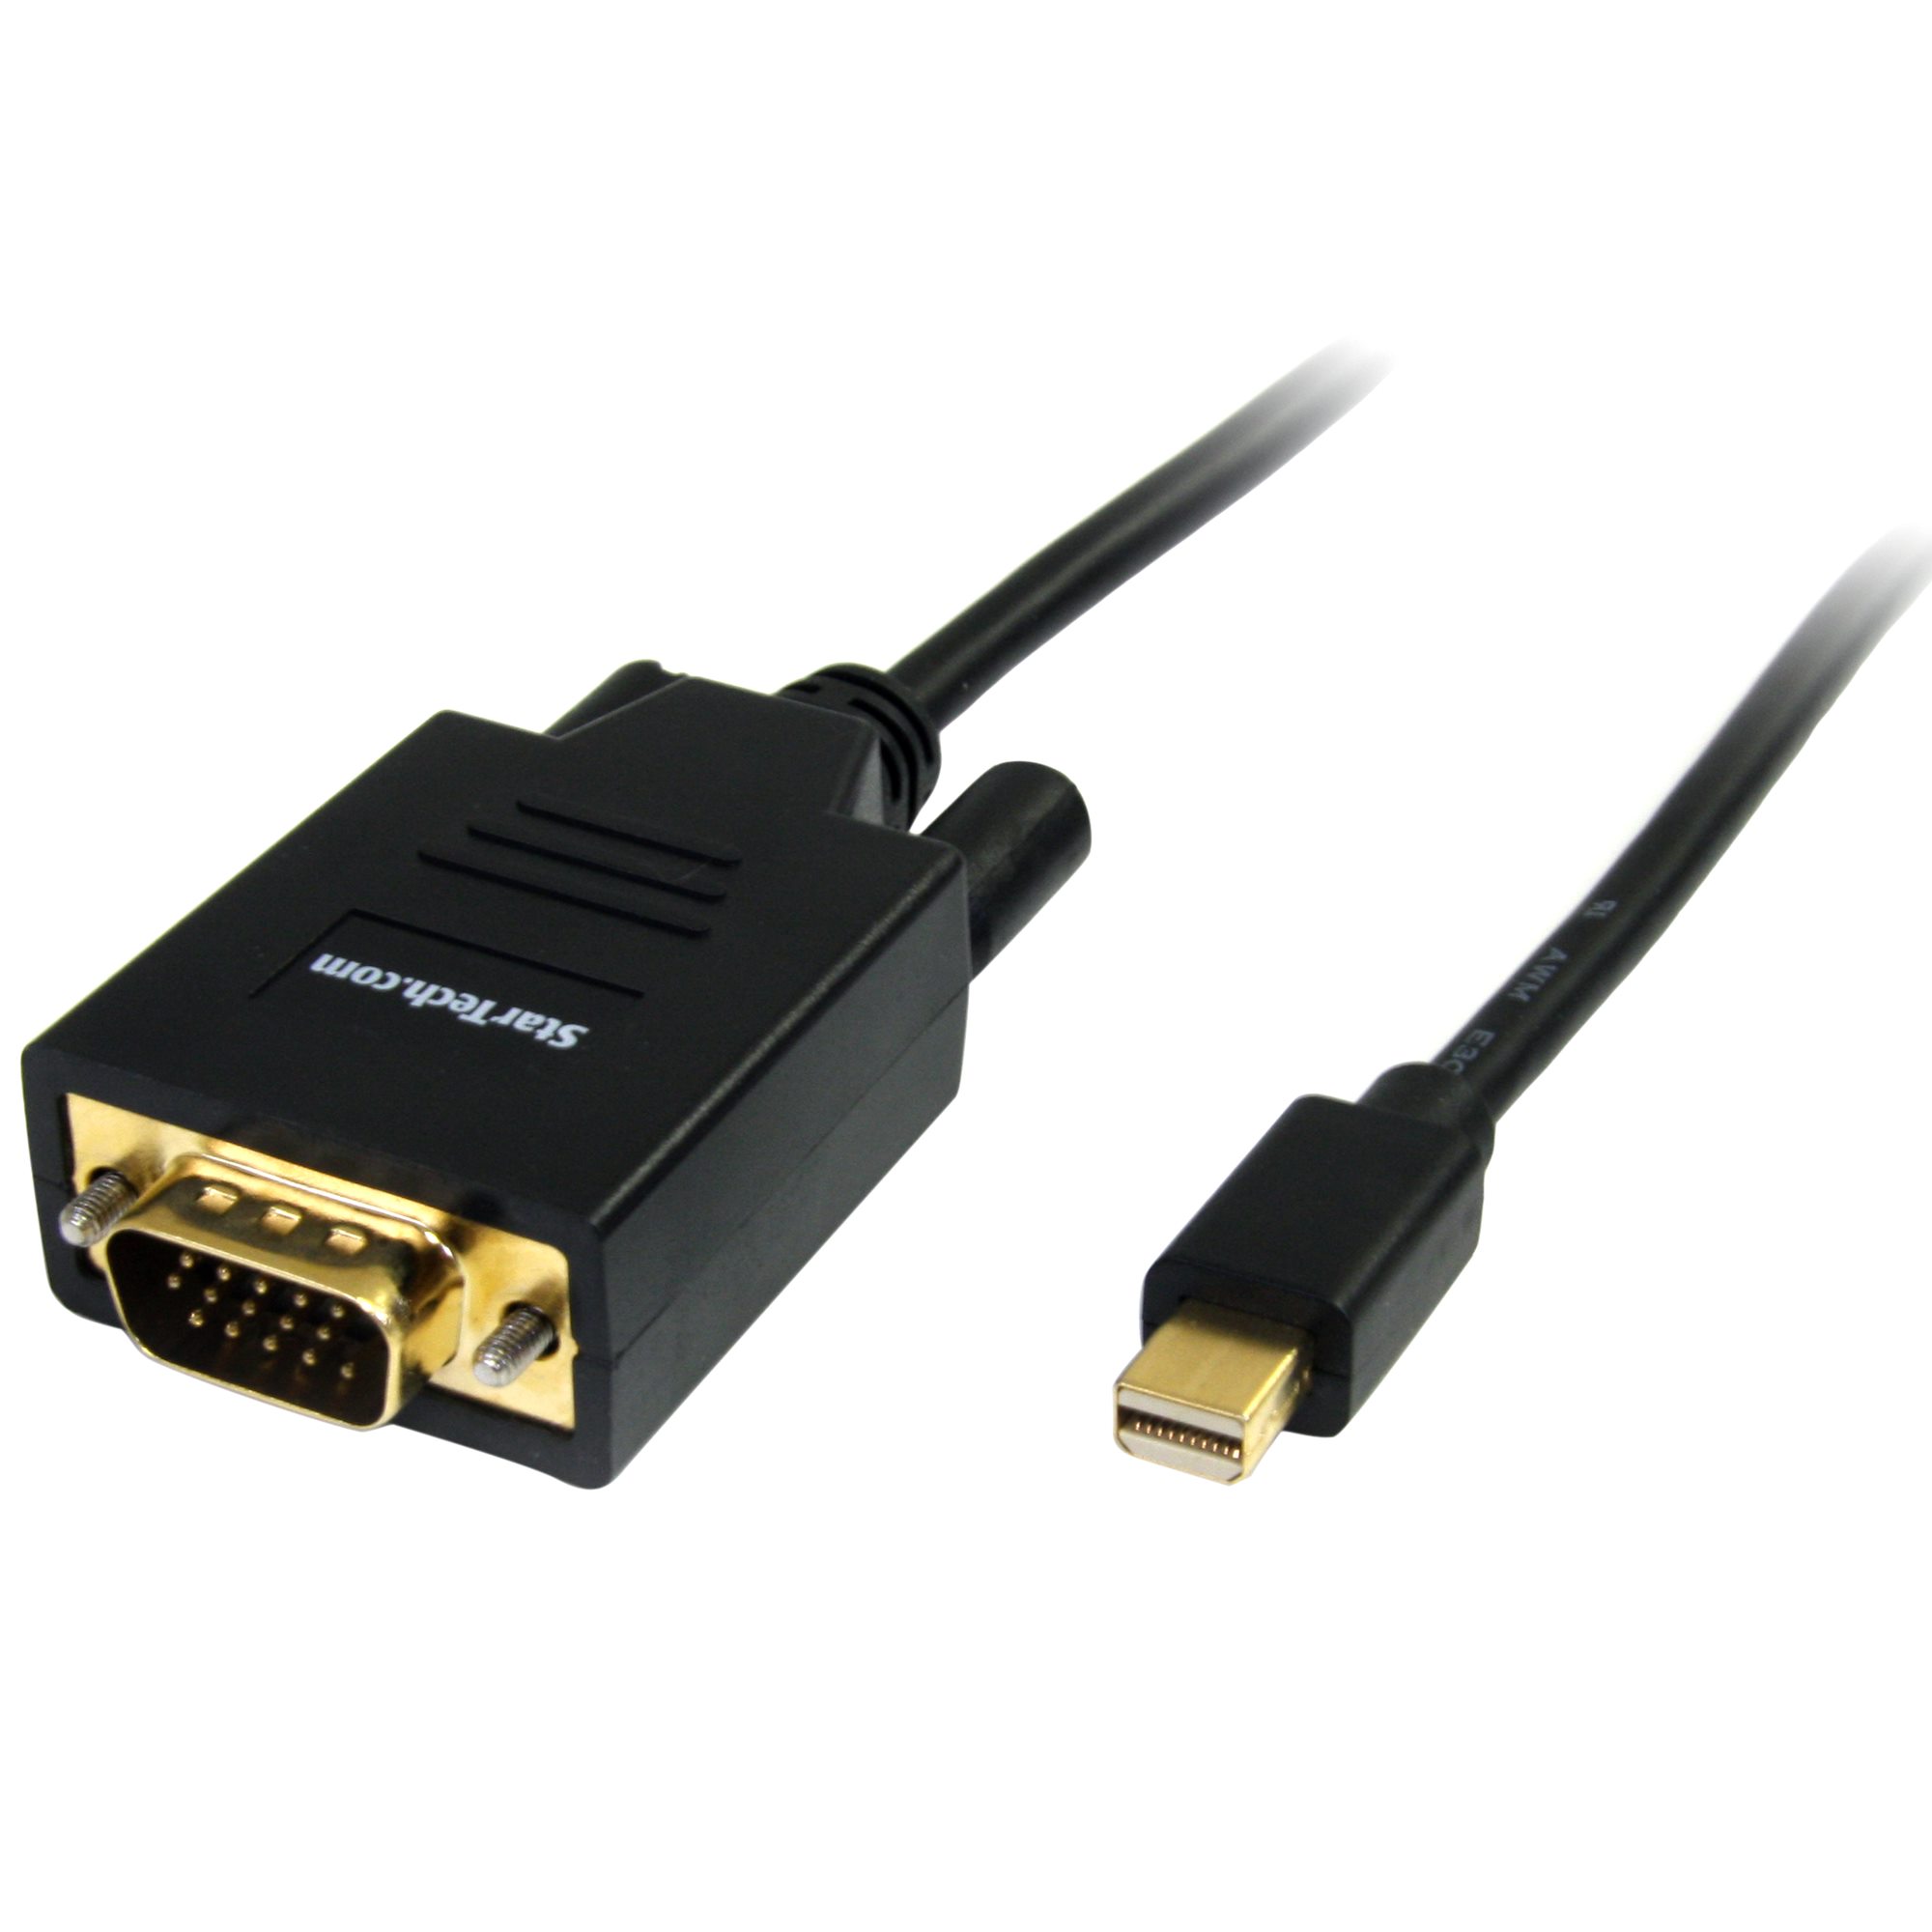 Mini Displayport DP to HDMI VGA DVI Display Port Adapter Cable for MacBook  iMac